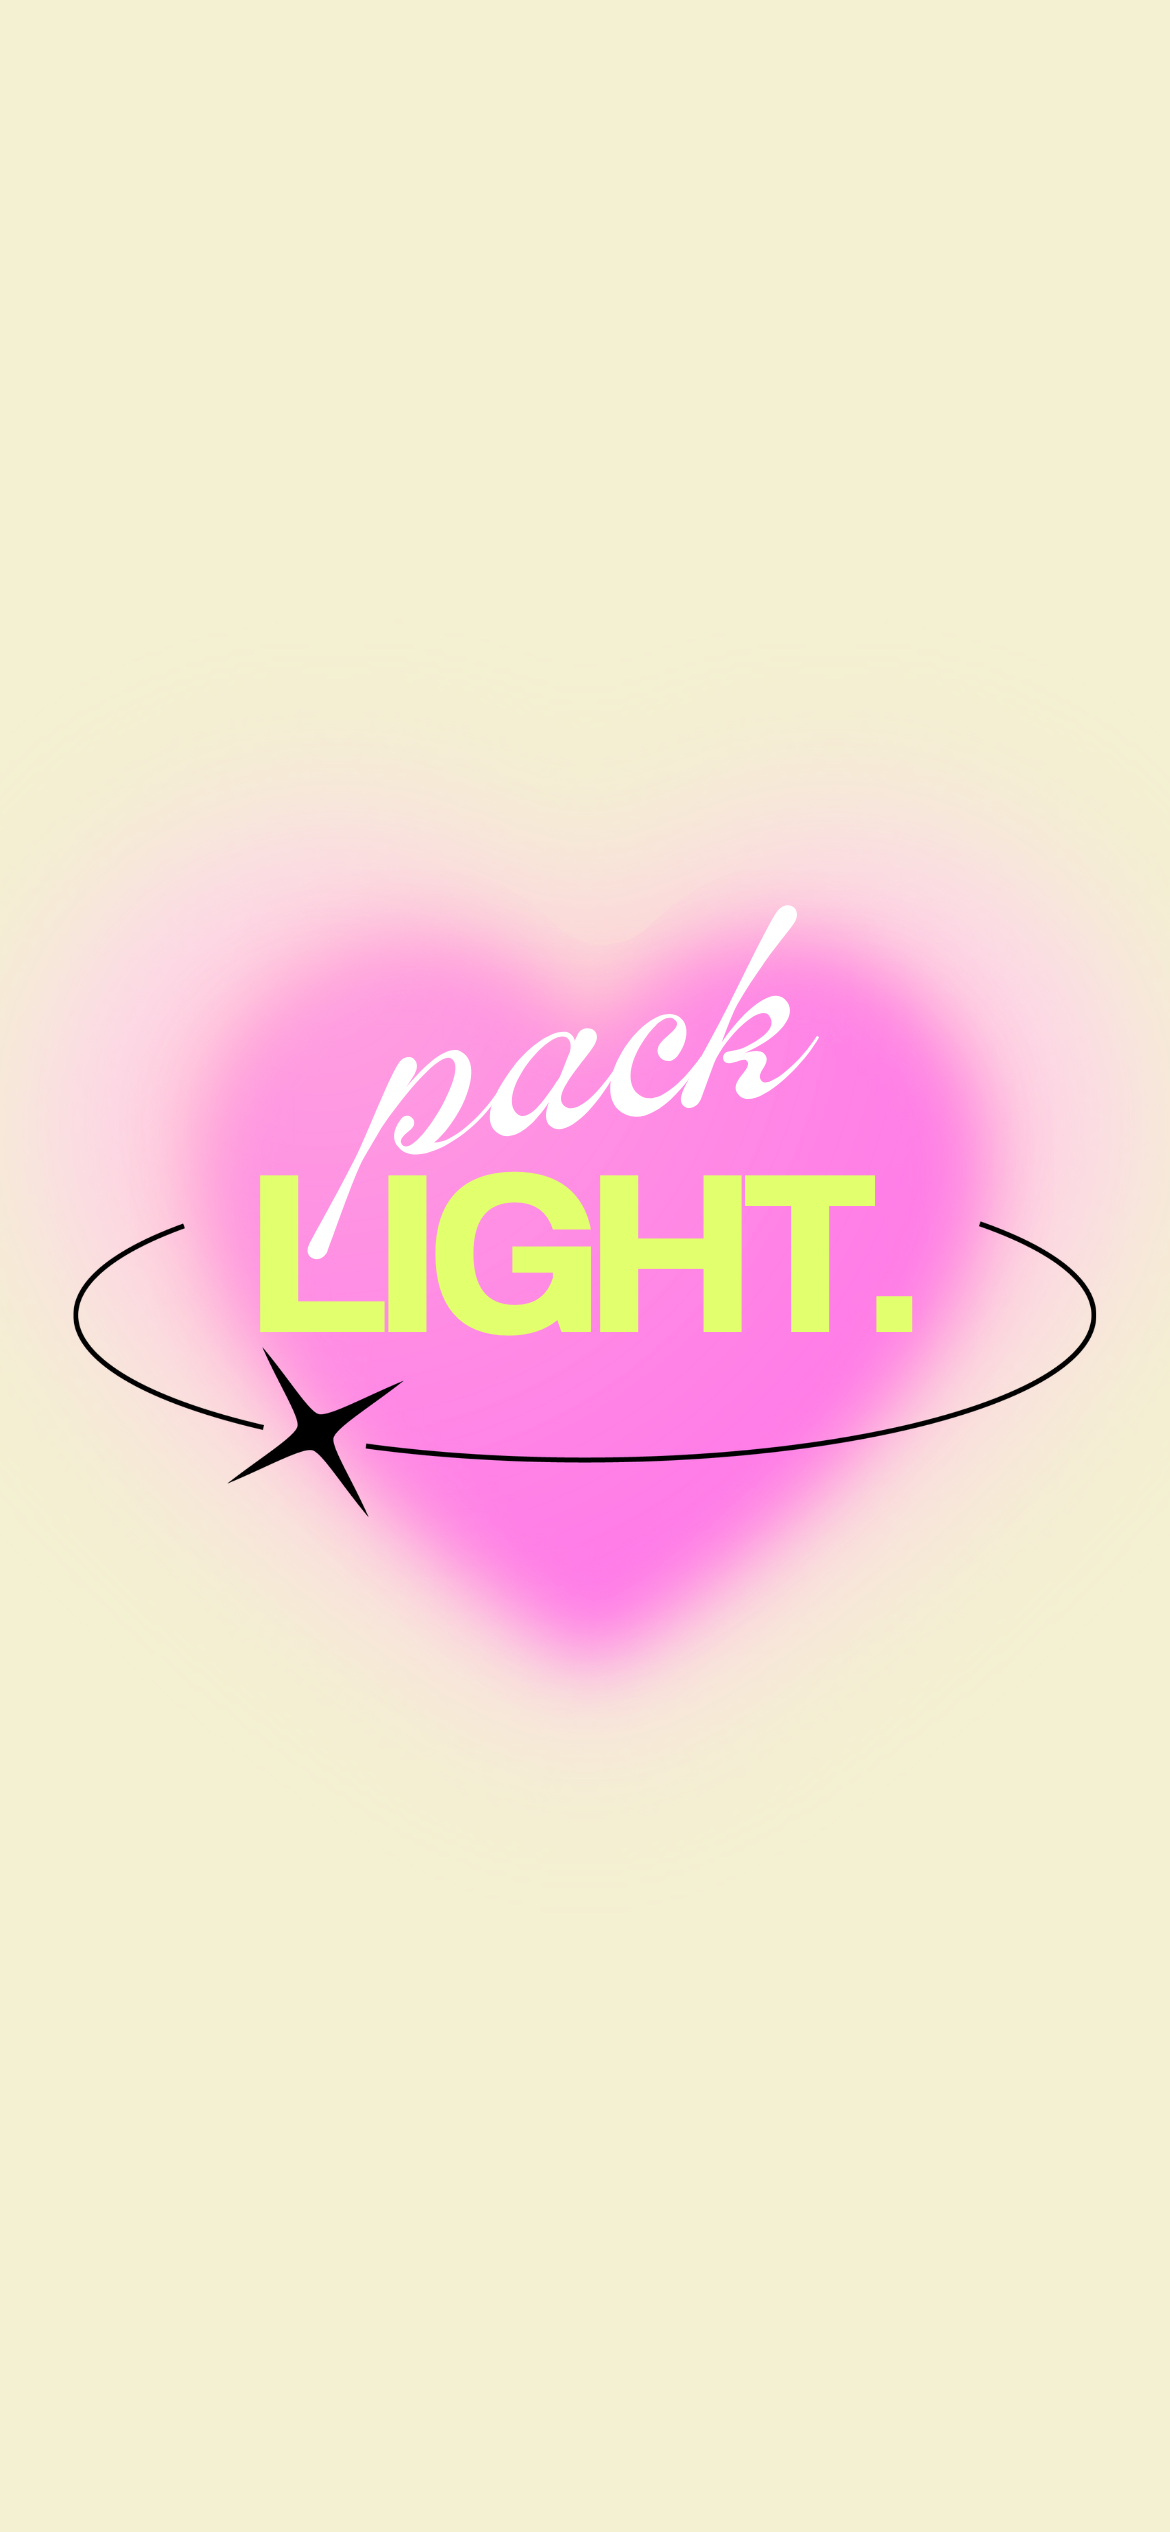 LOVEvanka- packlight3.png